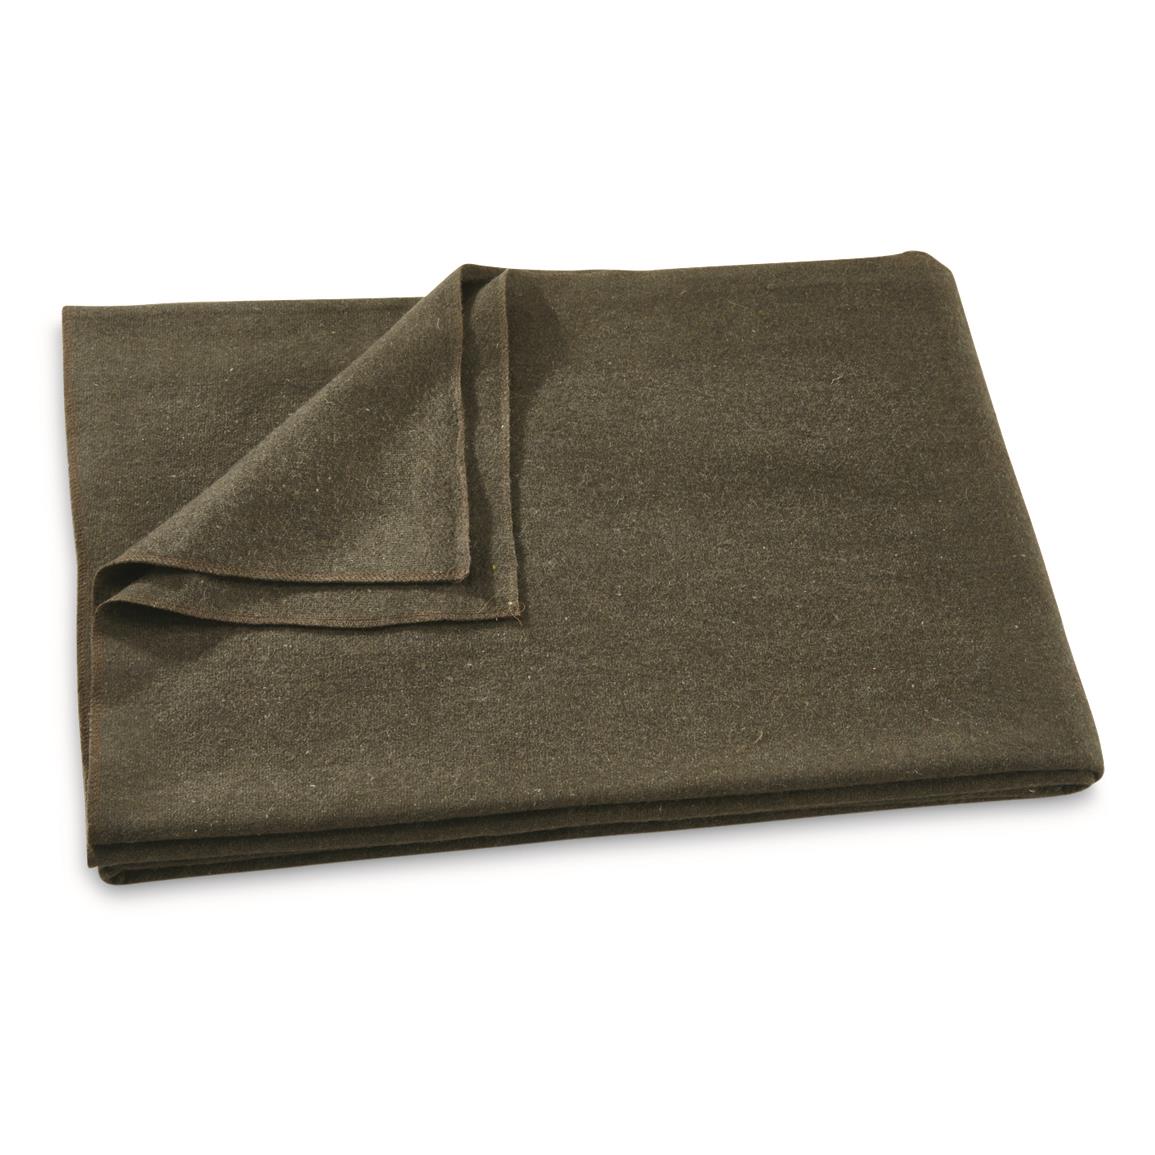 U.S. Military M43 WW2 Wool Blend Blanket, Reproduction, Olive Drab